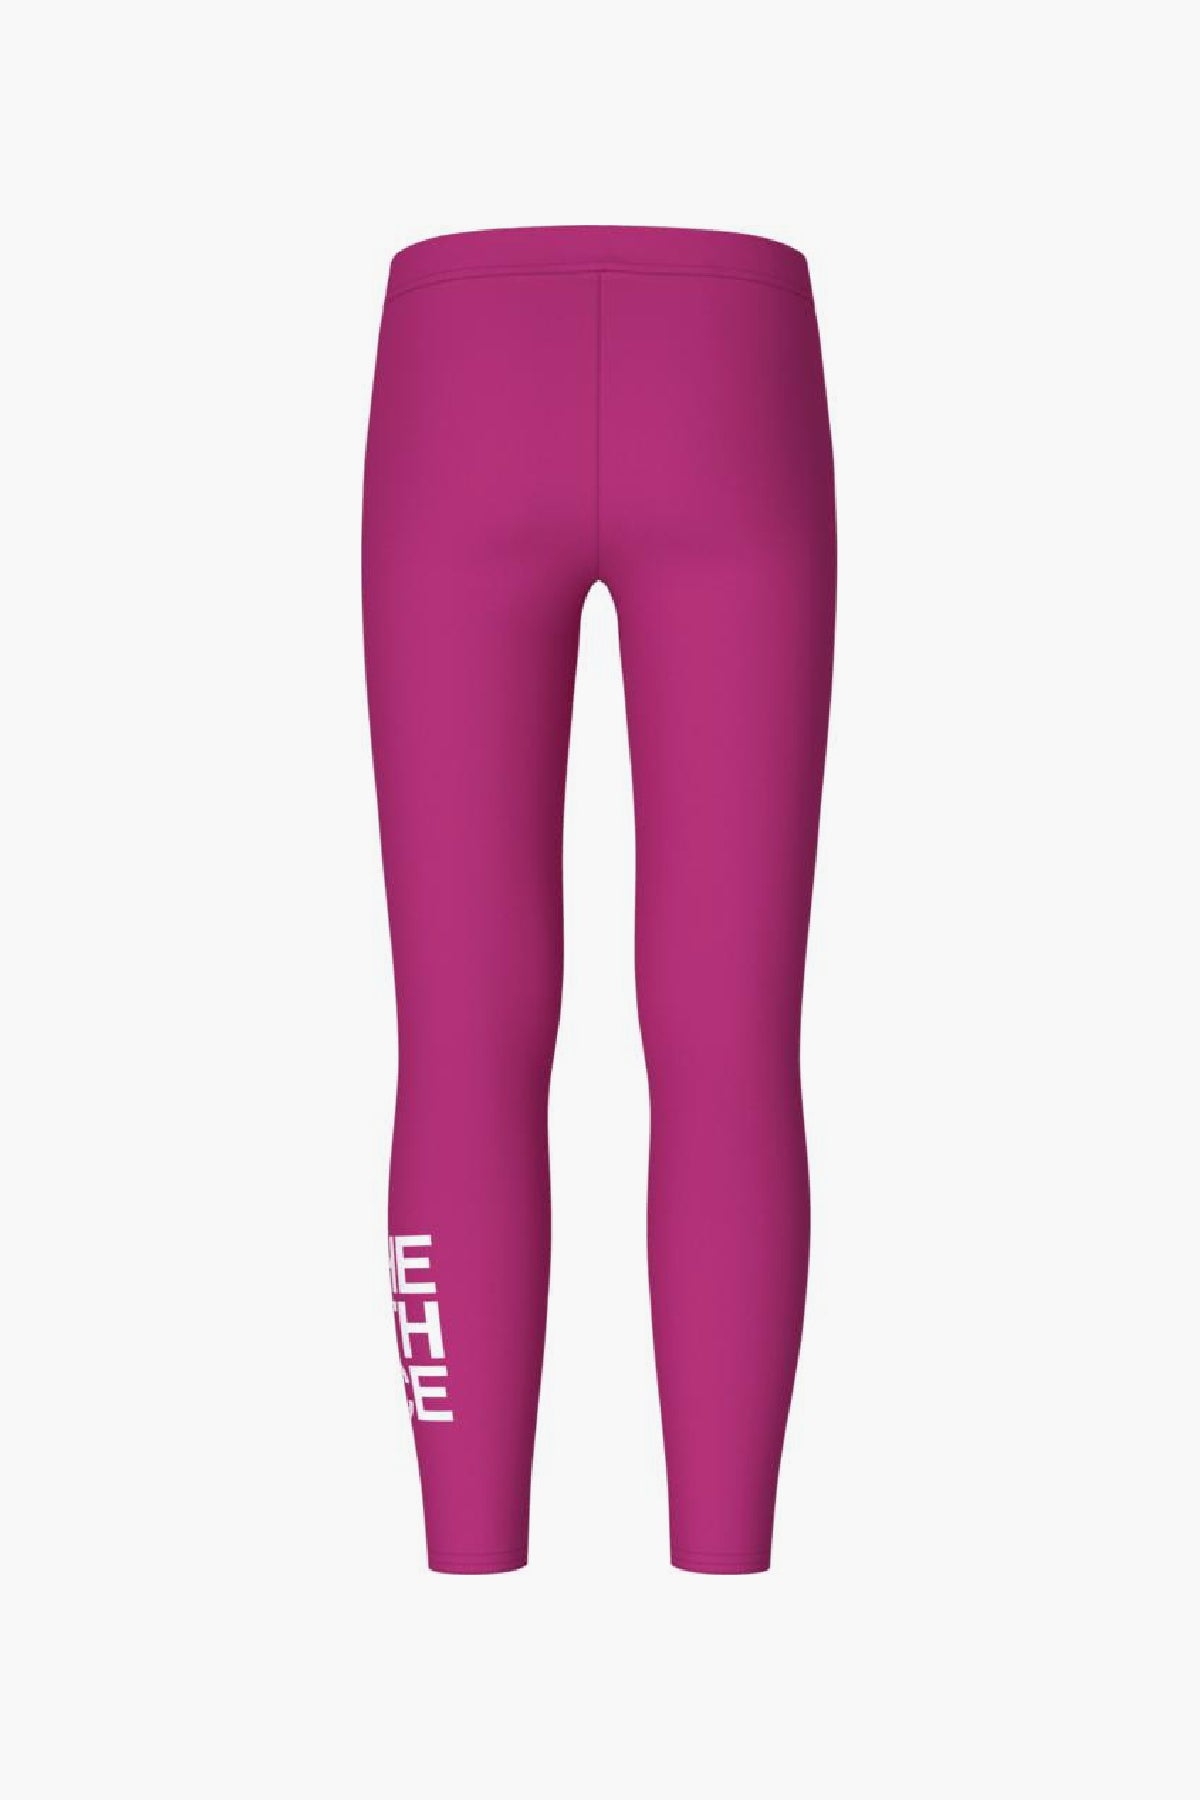 Buy The North Face Women's Mountain Athletics Leggings Pink in KSA